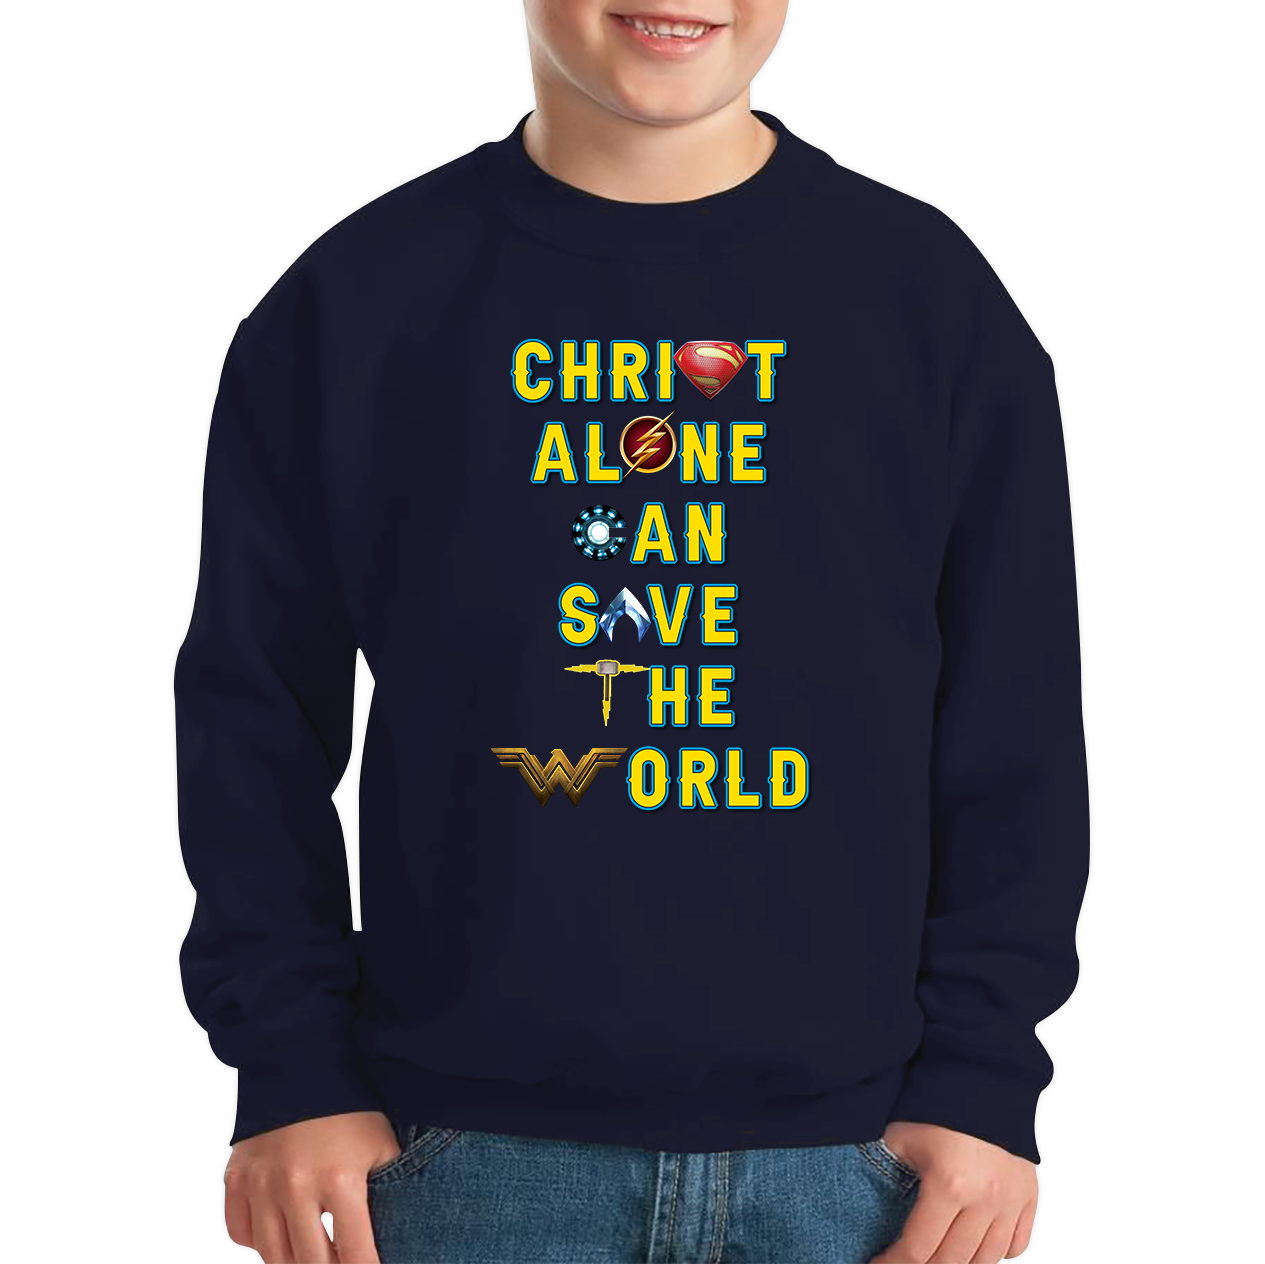 Christ Alone Can Save The World Jumper Avengers Superheroes Marvel Gift Kids Sweatshirt